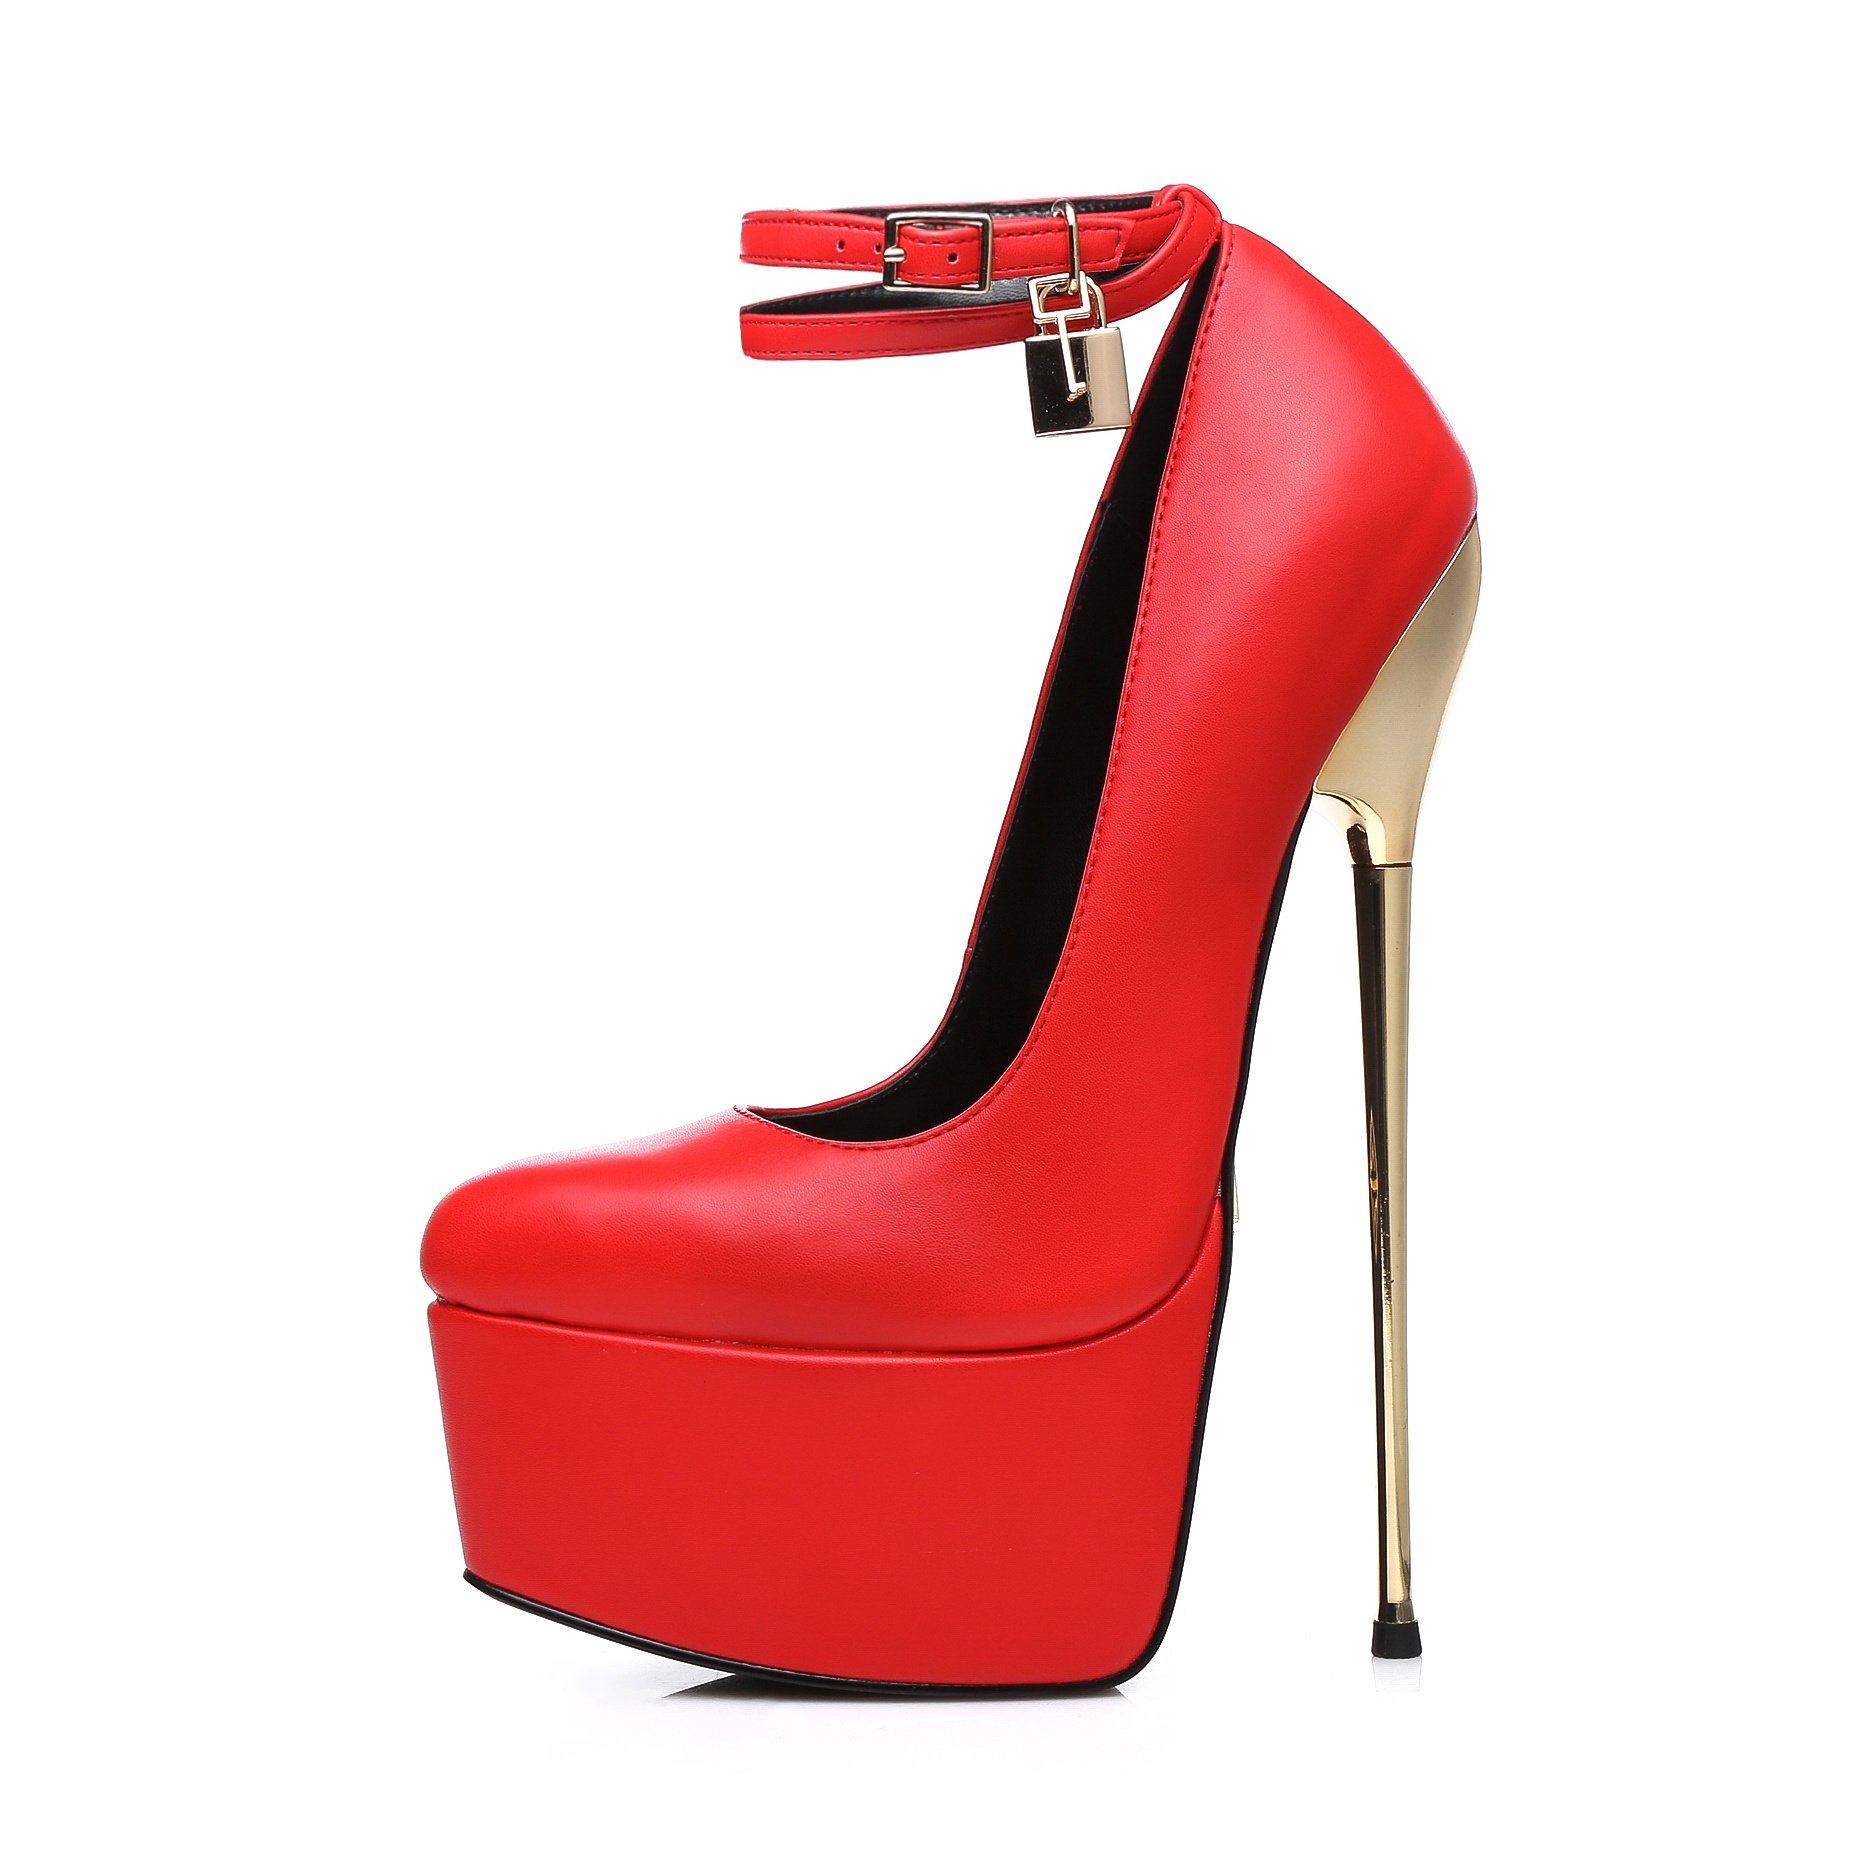 Red ESSENCE Giaro SLICK pumps with locking strap - Shoebidoo Shoes Giaro high heels